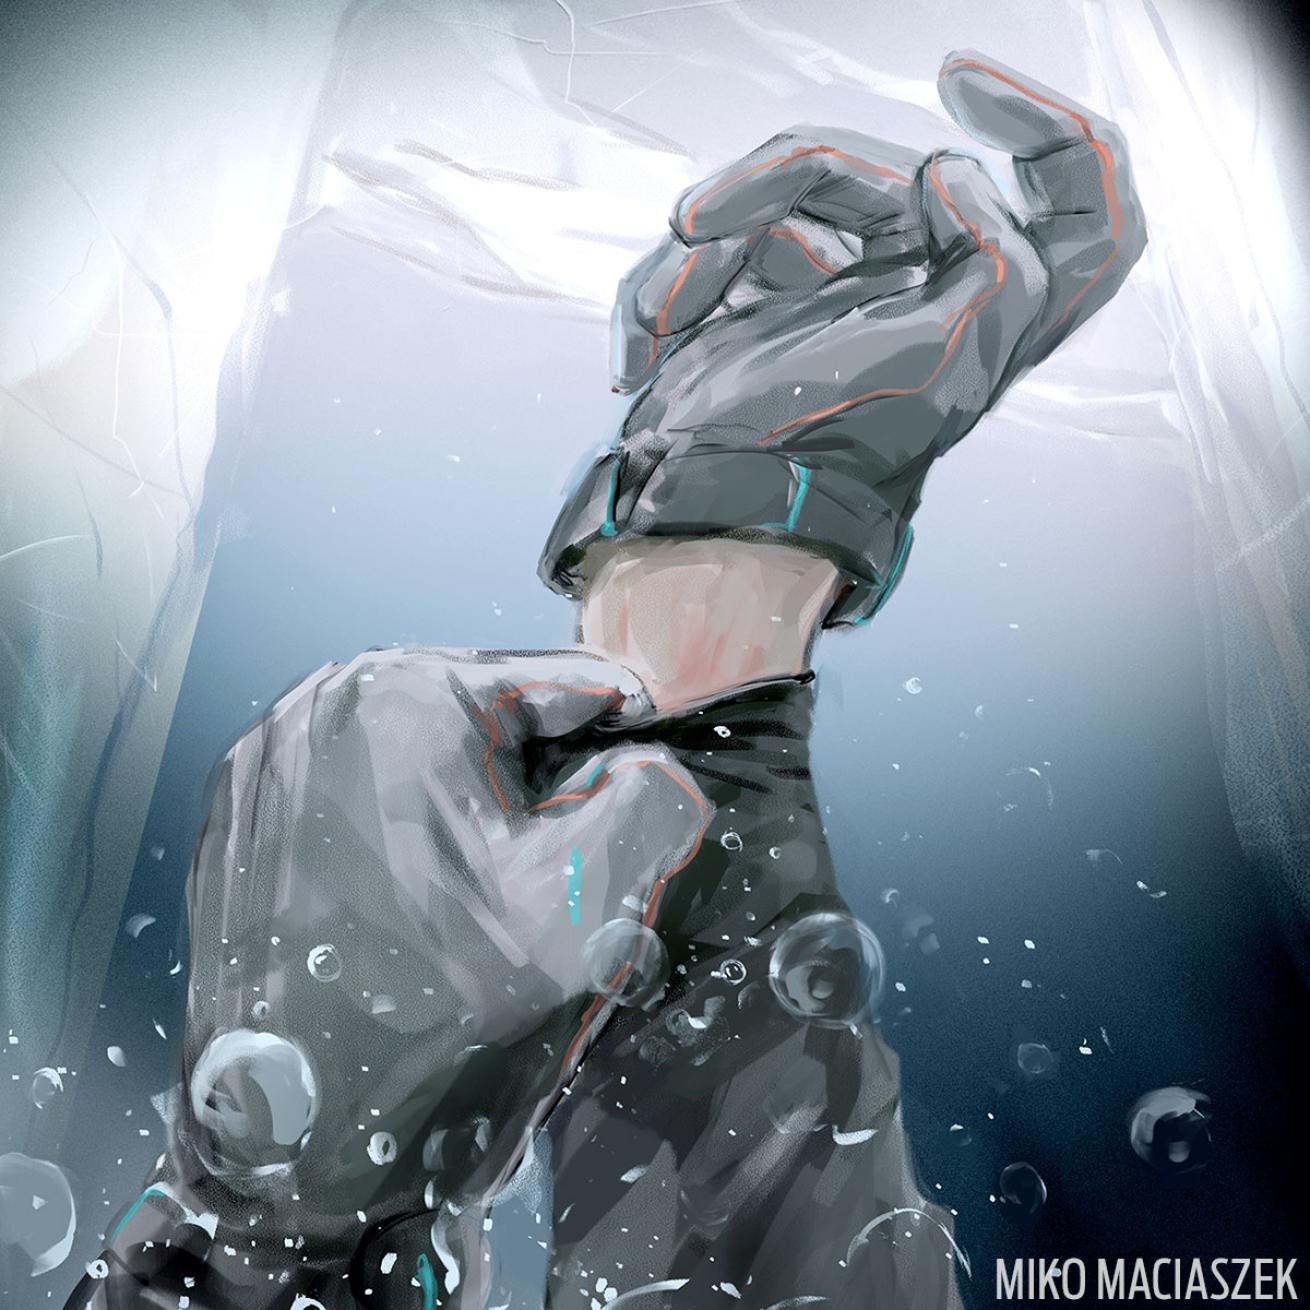 Scuba diver sinks below the ice.